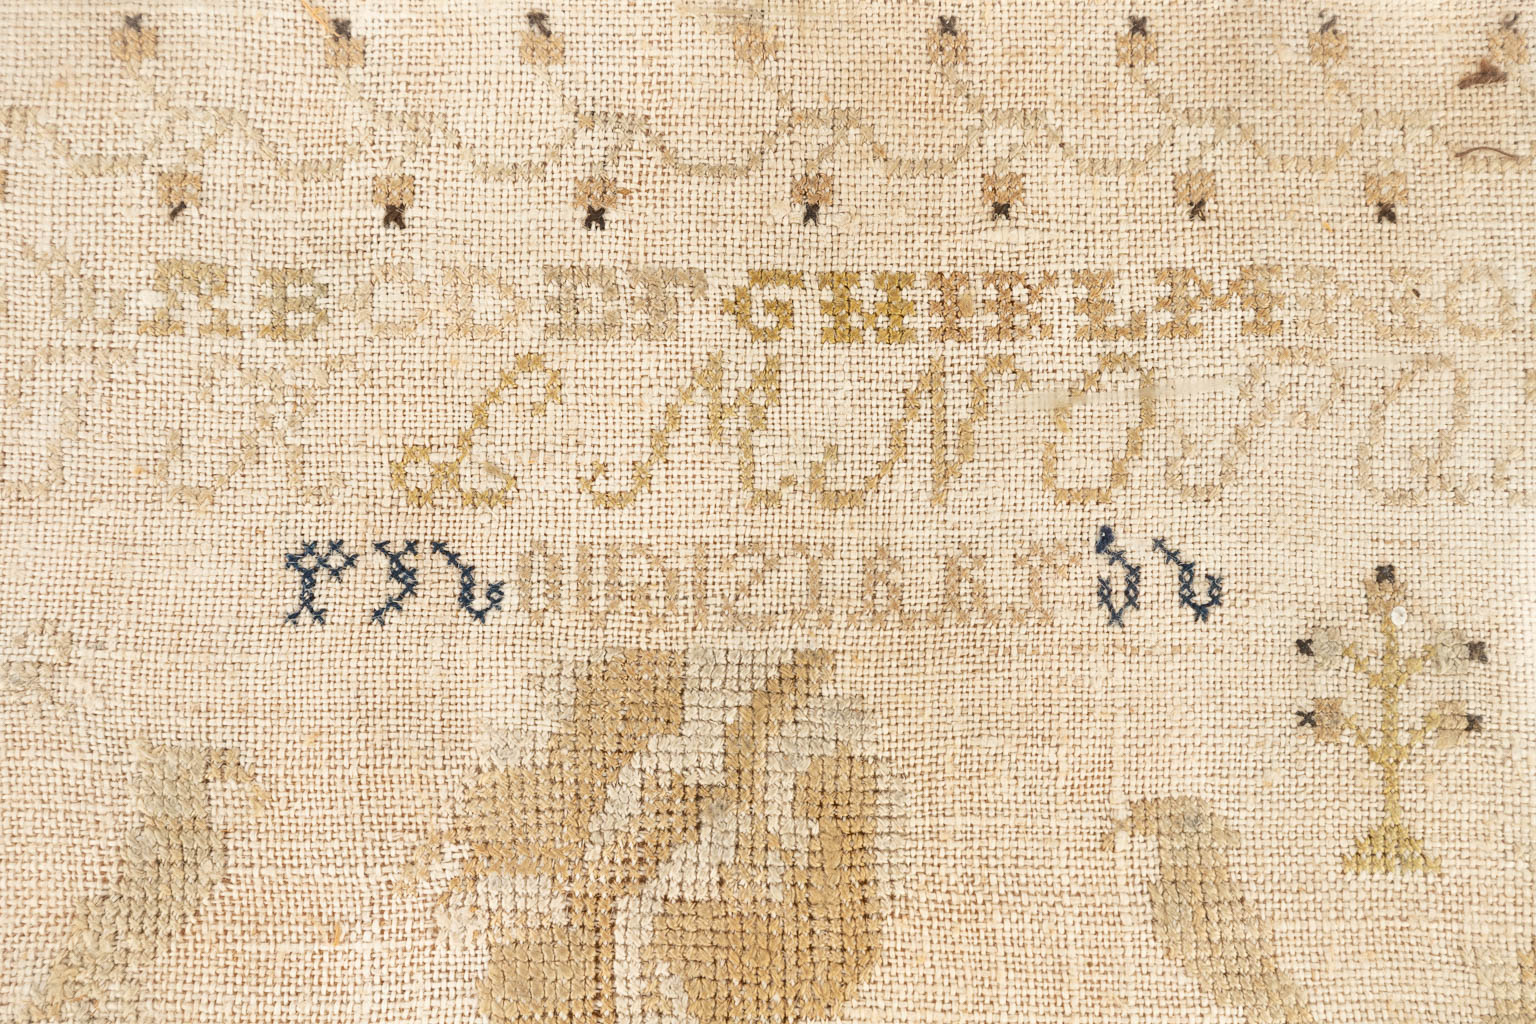 An anitque &quot;Sampler&quot; needlework. 18th C. (W: 50 x H: 27 cm) - Image 8 of 10